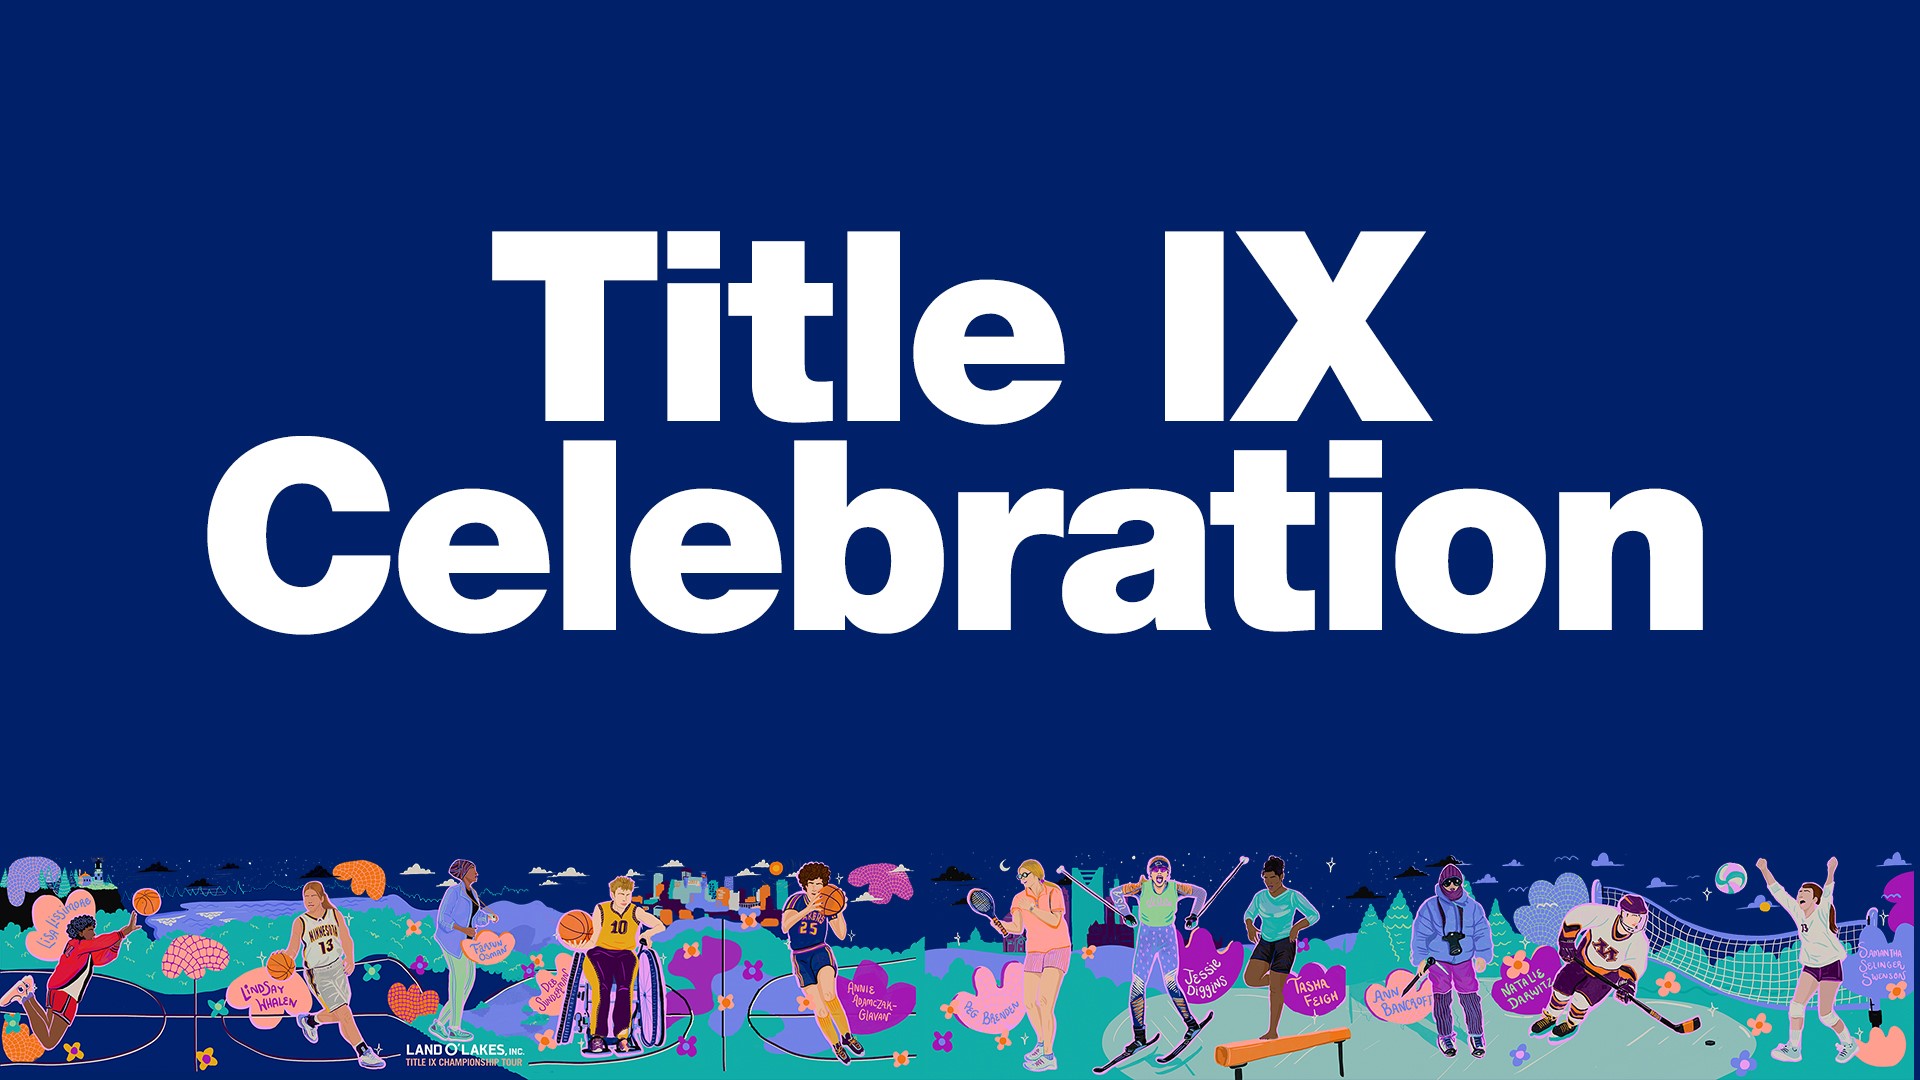 Title IX Celebration